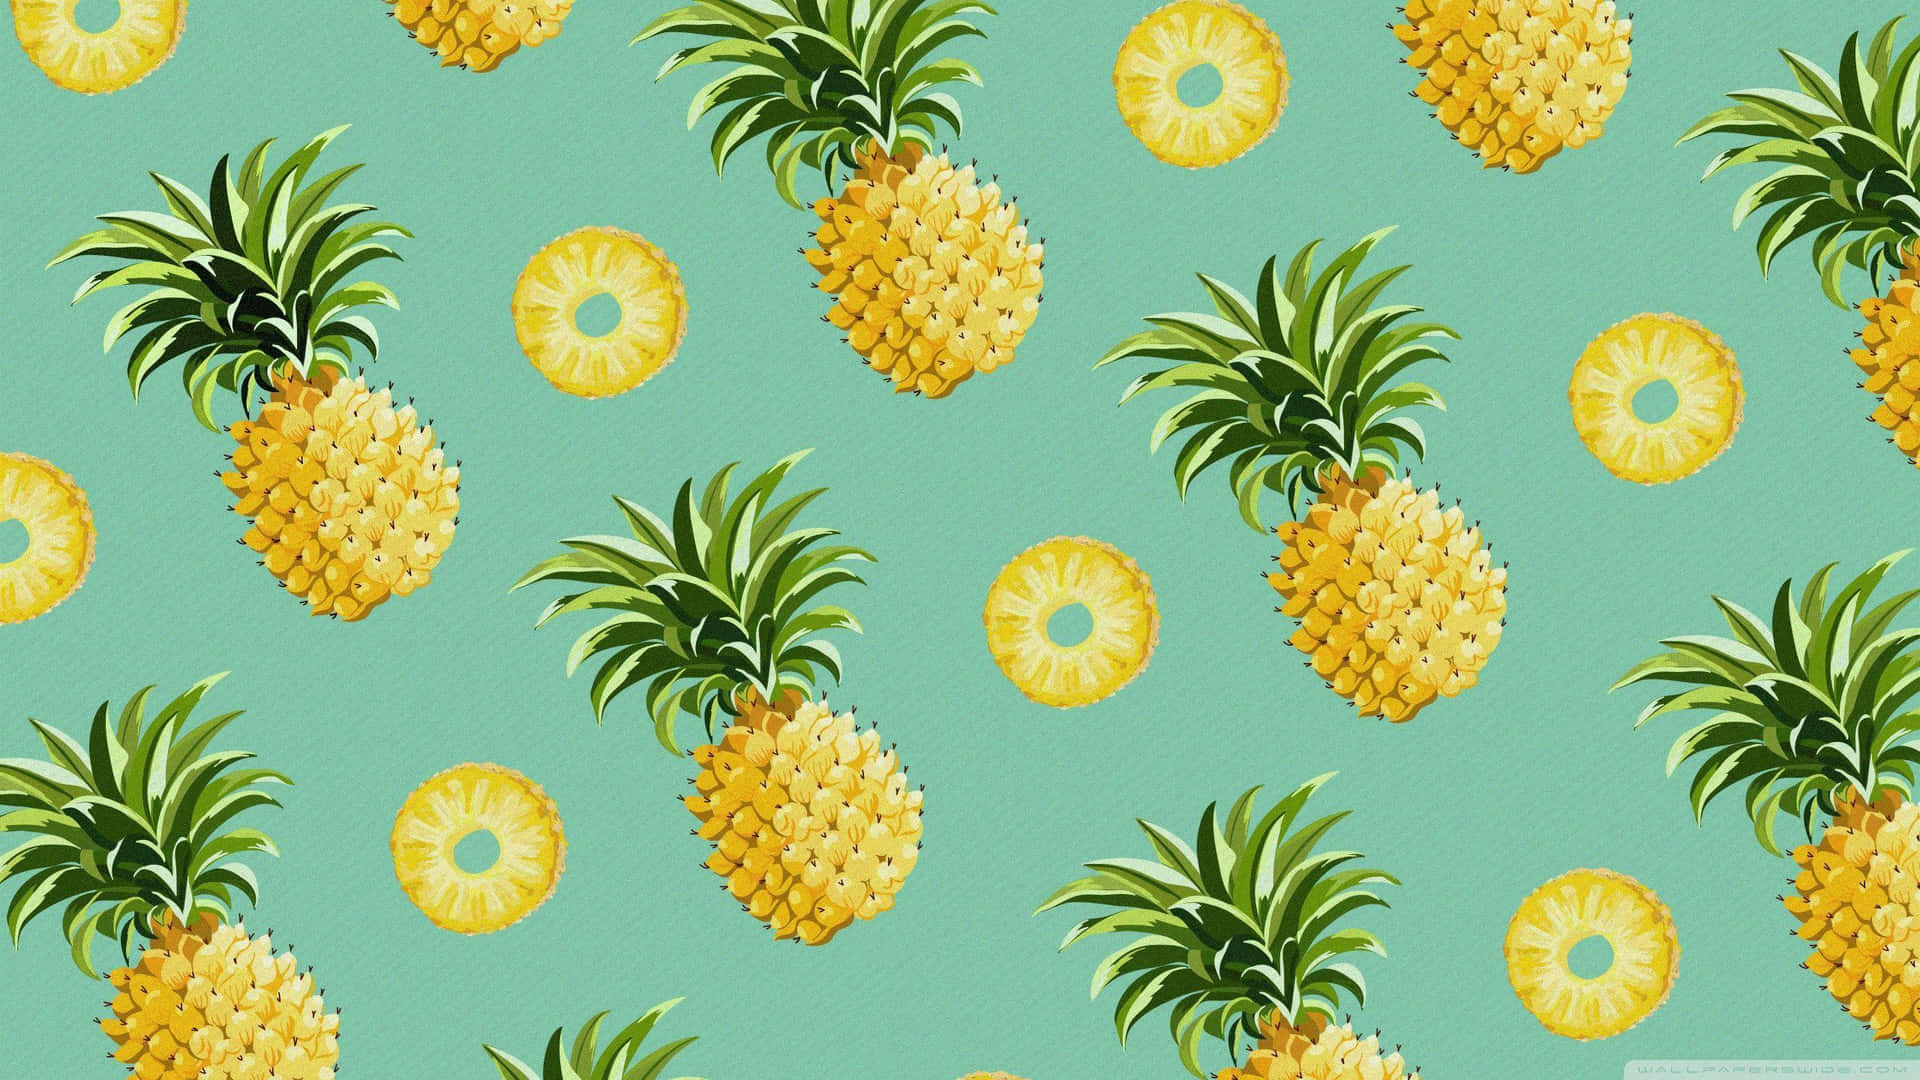 A sweet desktop background featuring a juicy pineapple. Wallpaper